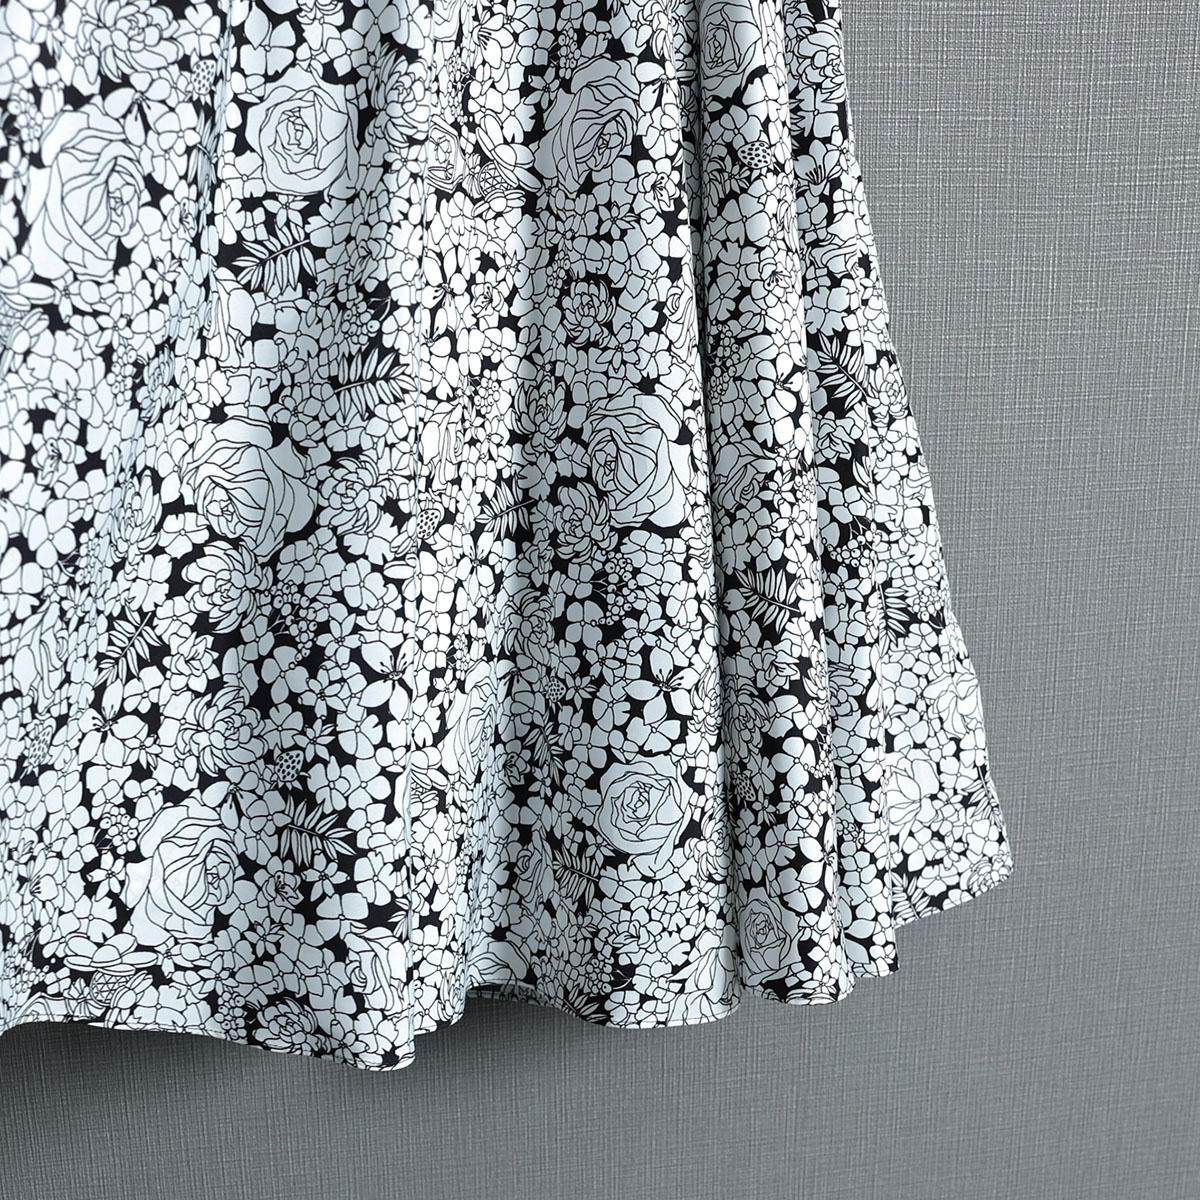 『Sincere』 circular skirt WHITE×BLACK画像